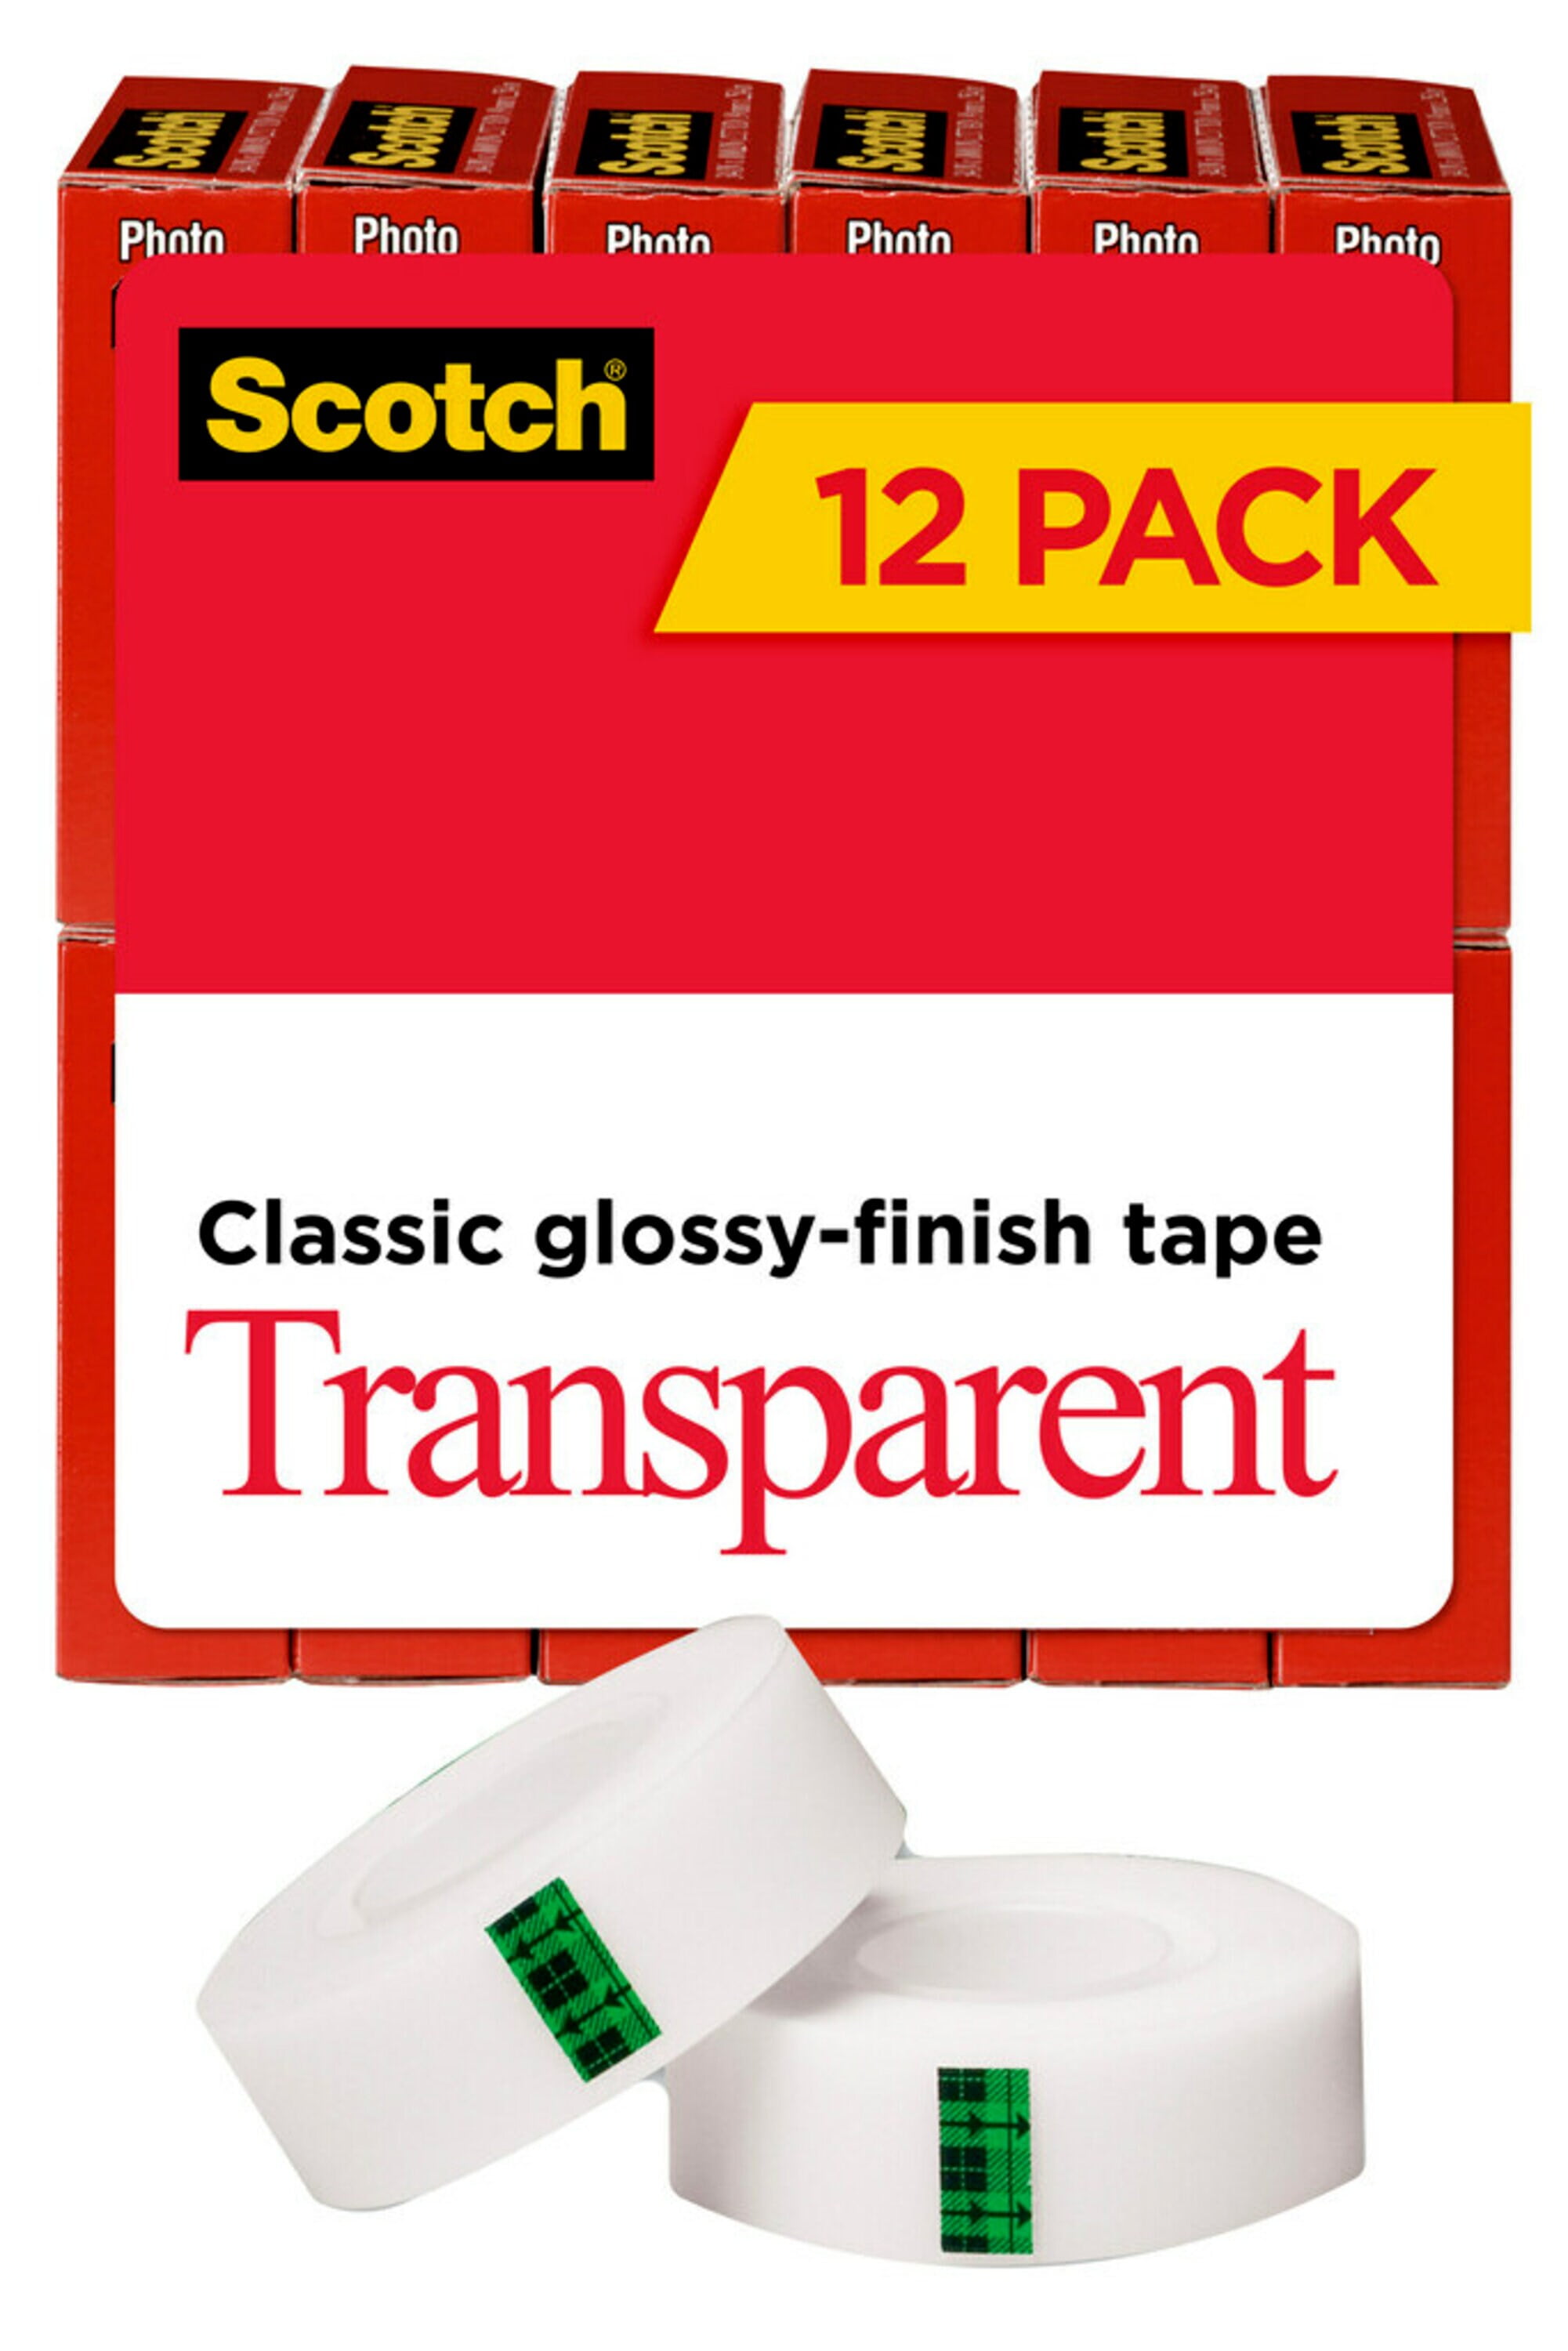 Flex Tape Rubberized Waterproof Tape, 8 inches x 5 feet, White